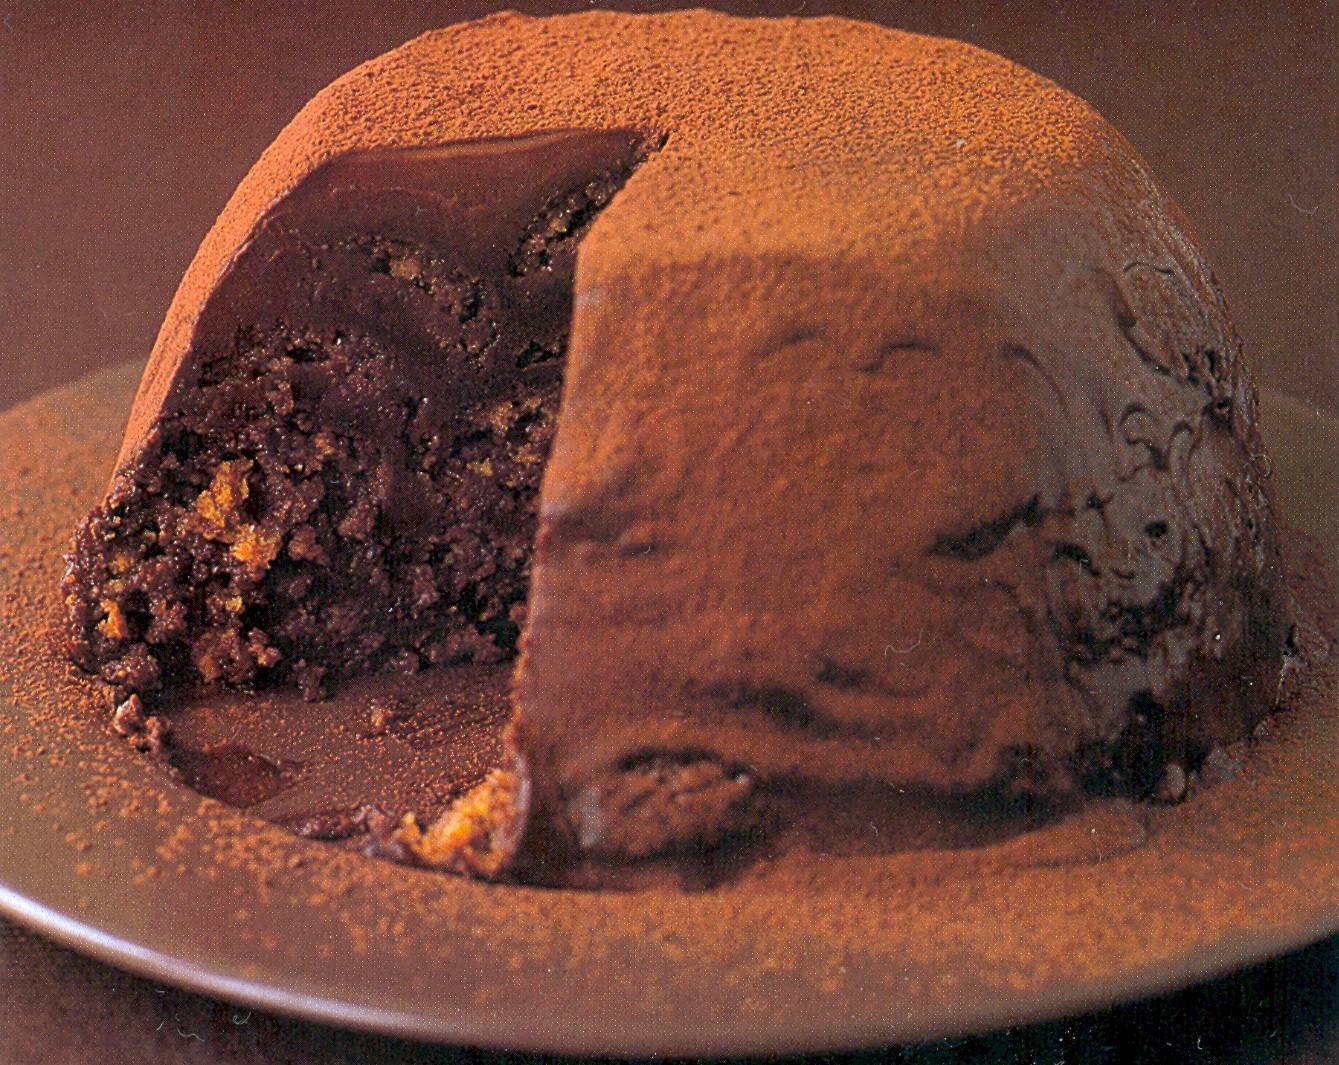 Torta de chocolate.jpg (564 KB)